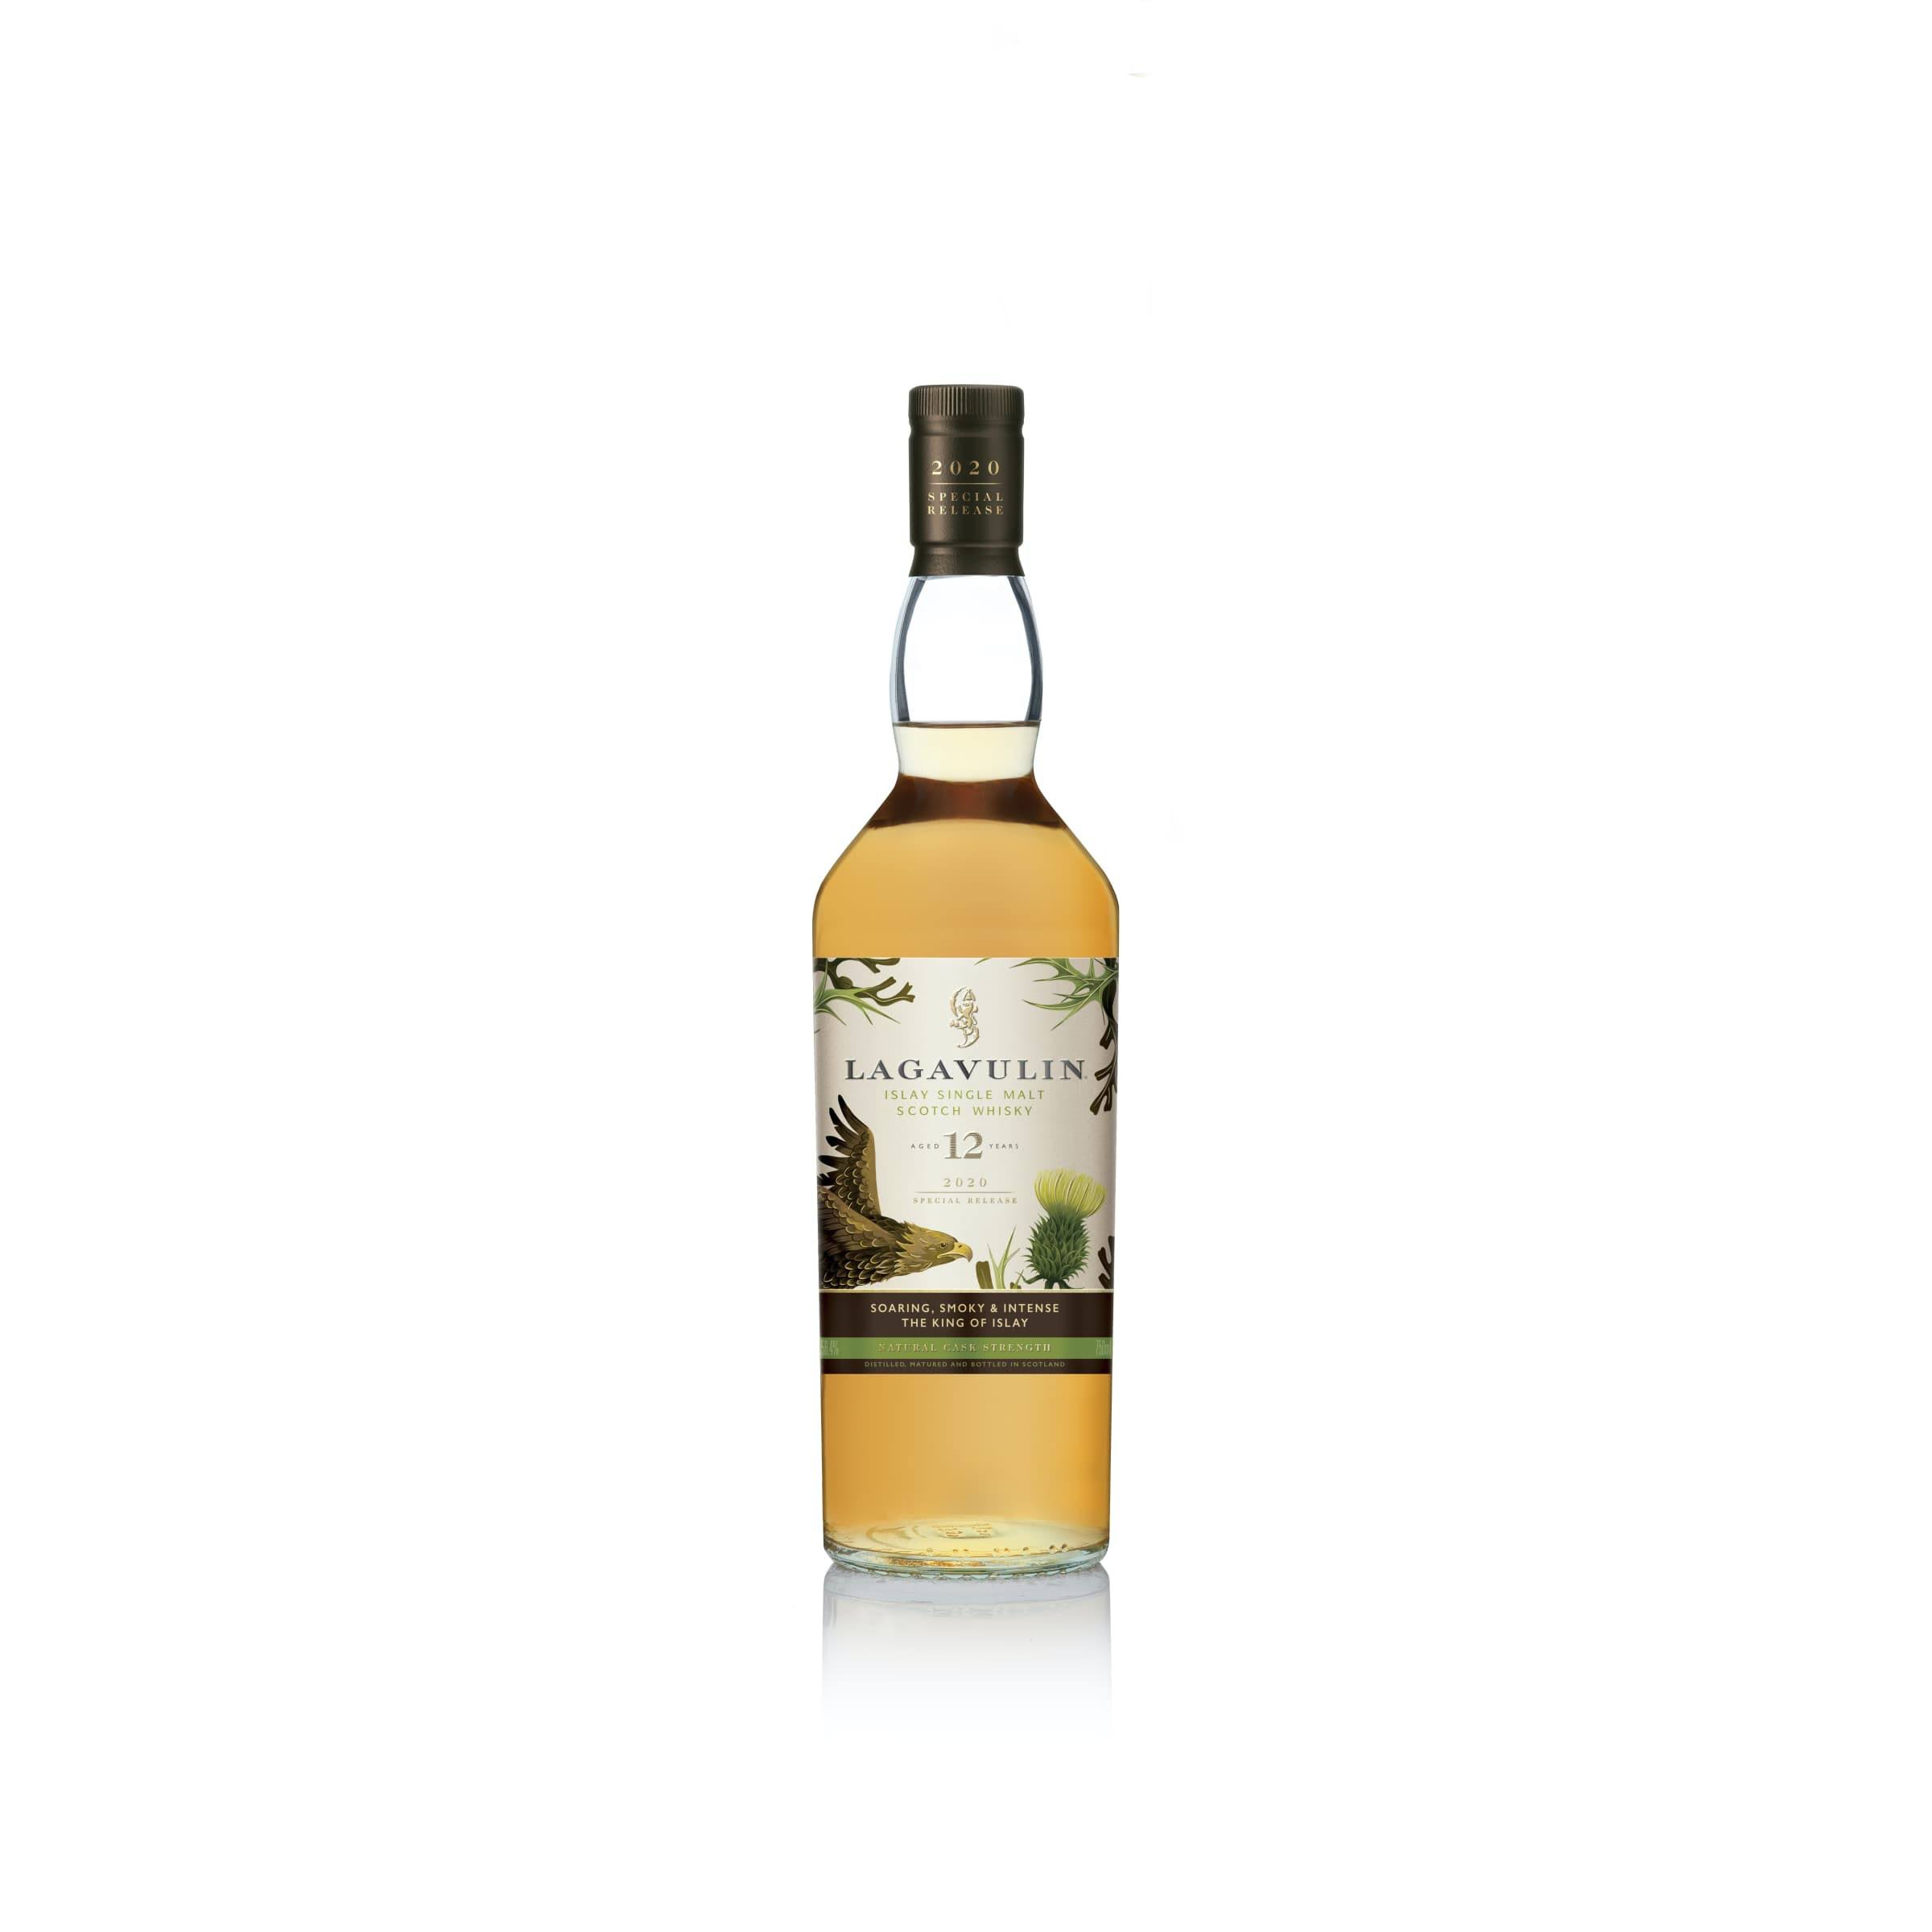 Lagavulin Scotch Single Malt Whisky - 12 Year, 750ml